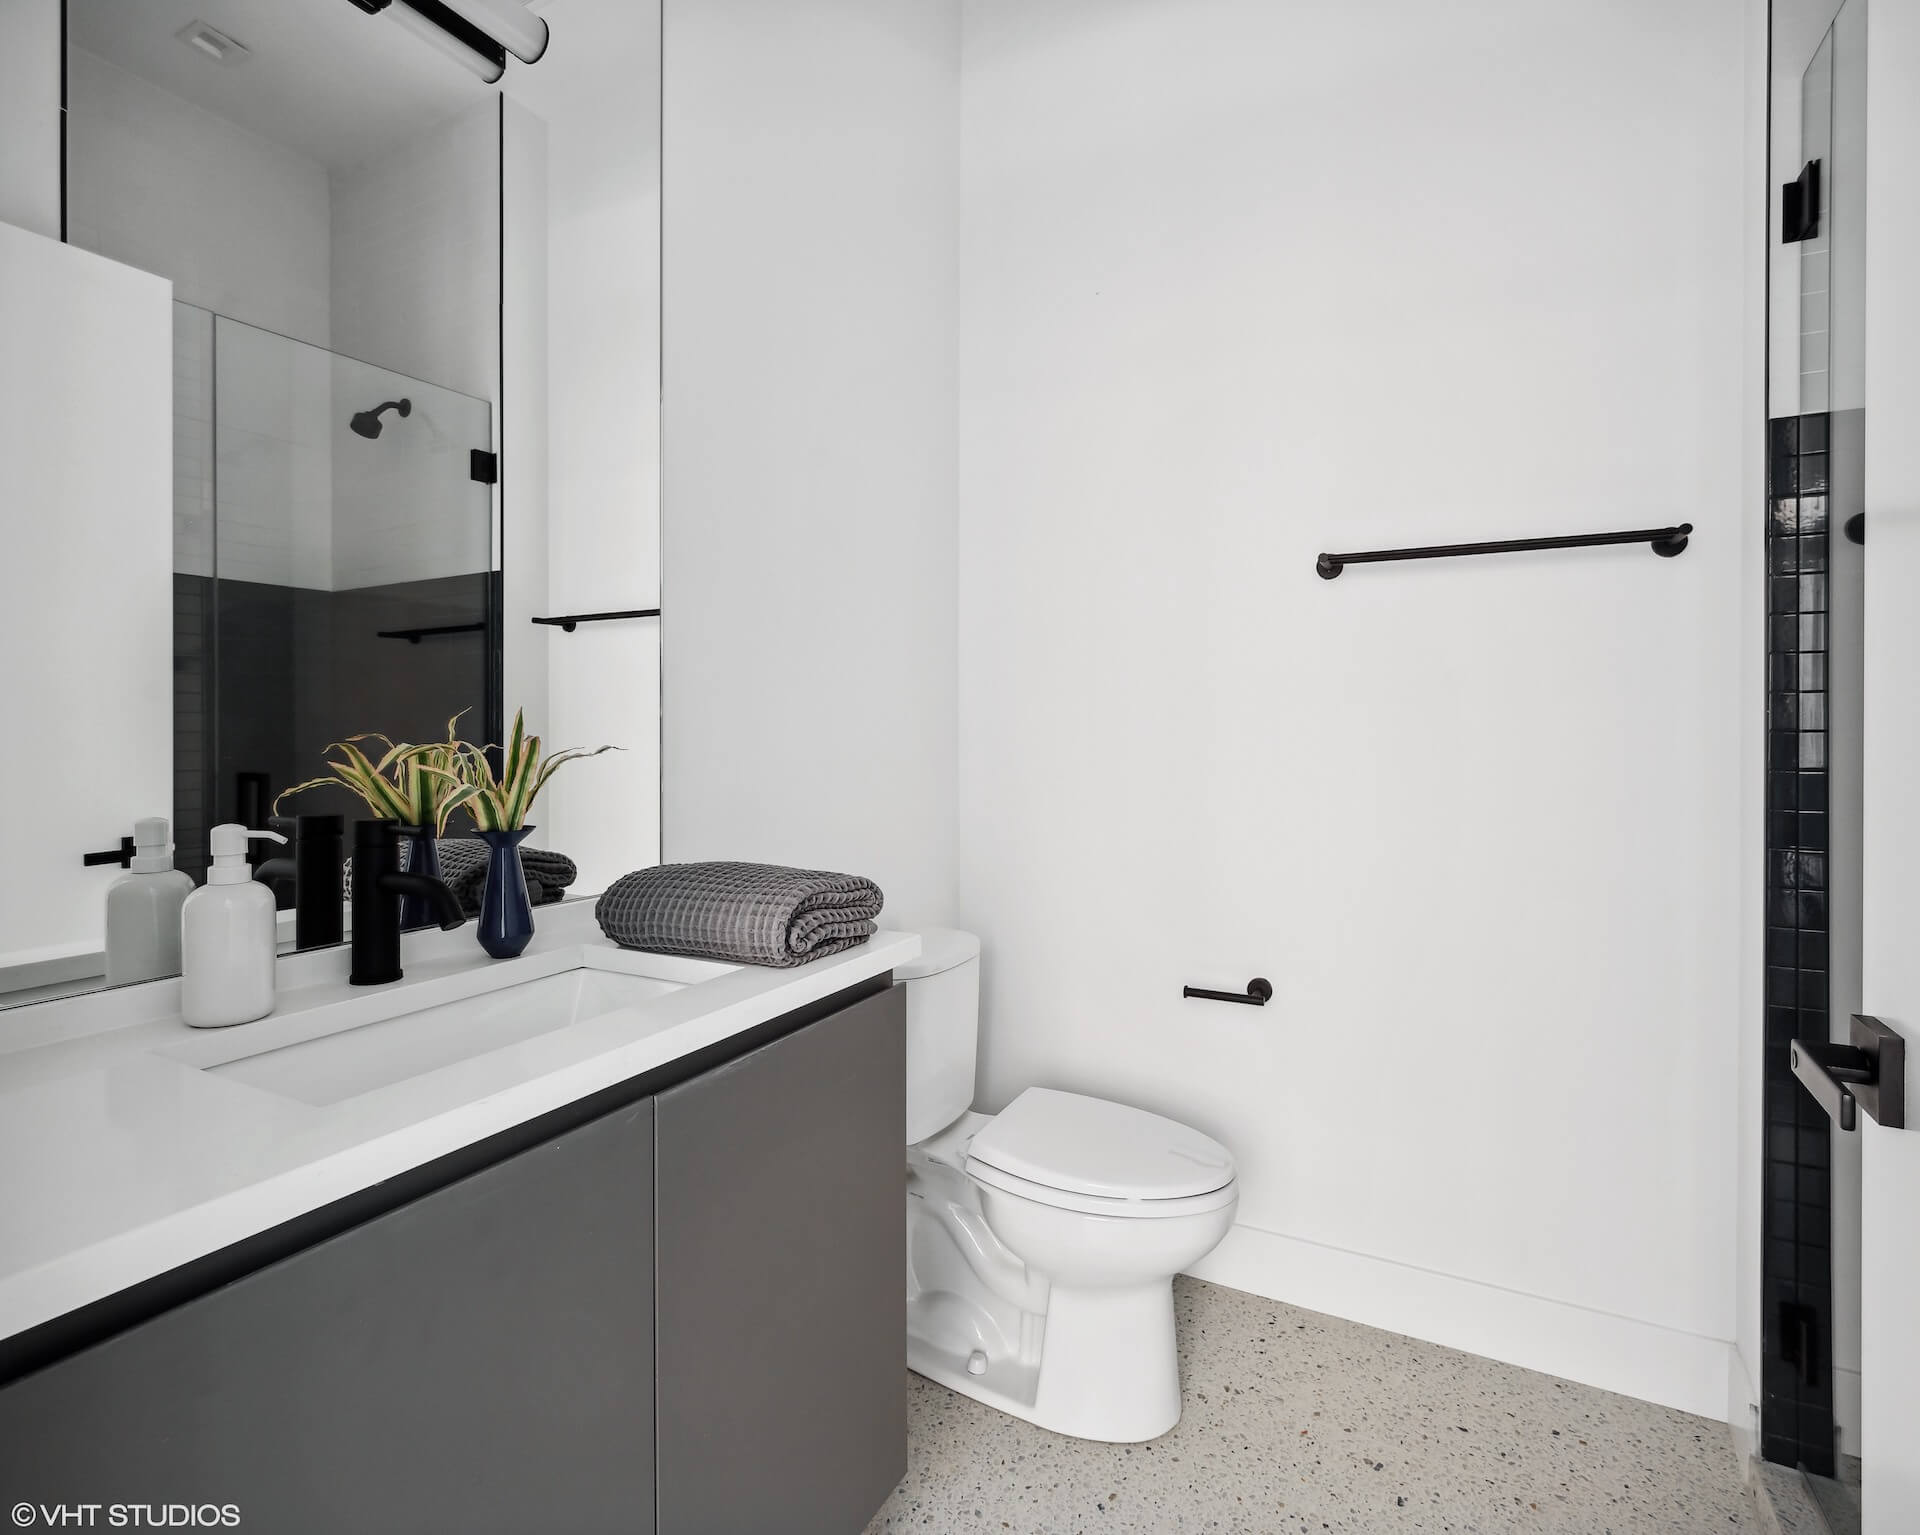 Modern minimalist bathroom with rectangular sink, custom fixtures, and granite style countertops.